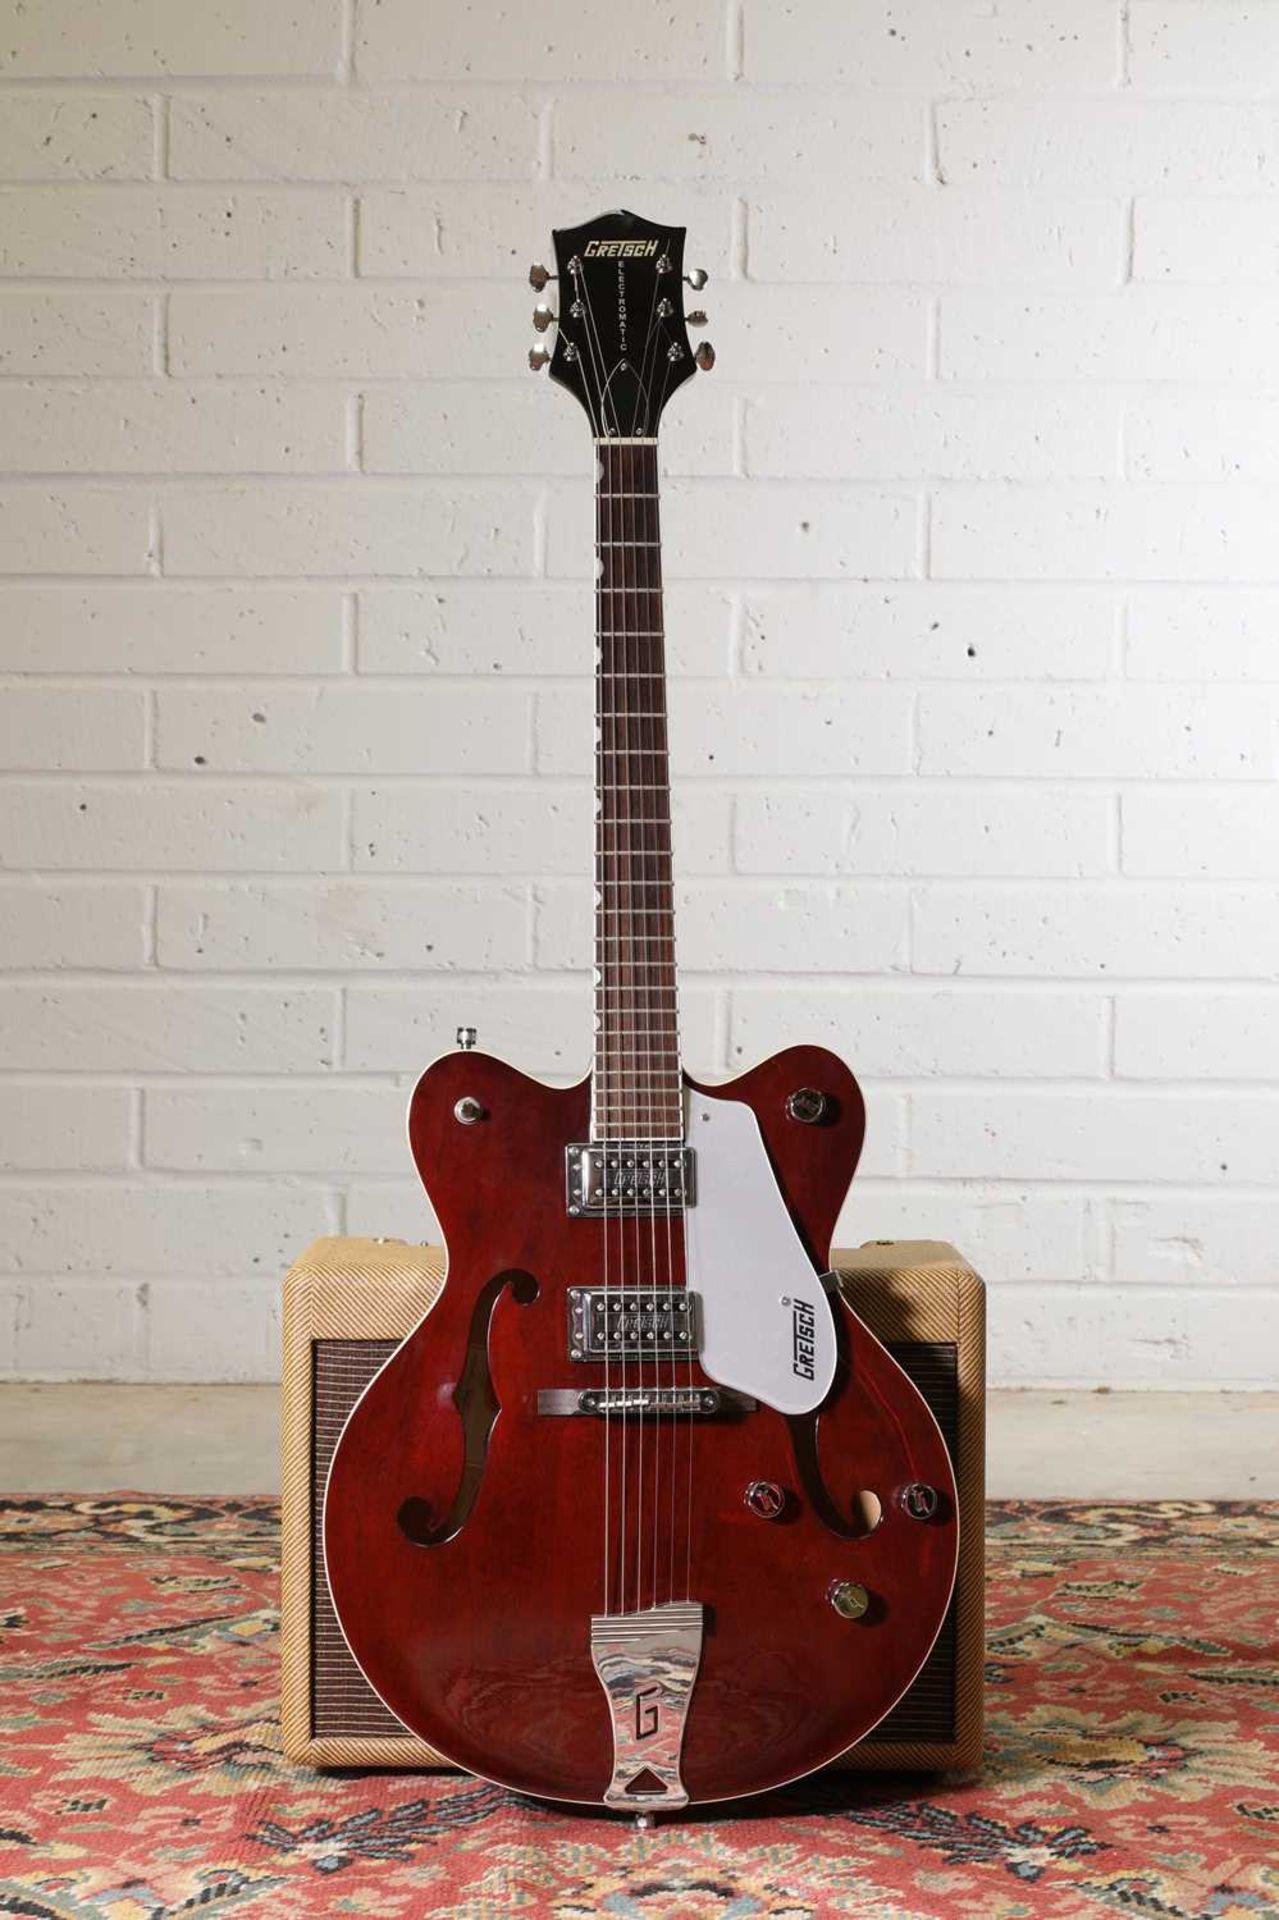 A Gretsch Electromatic semi-hollow electric guitar,